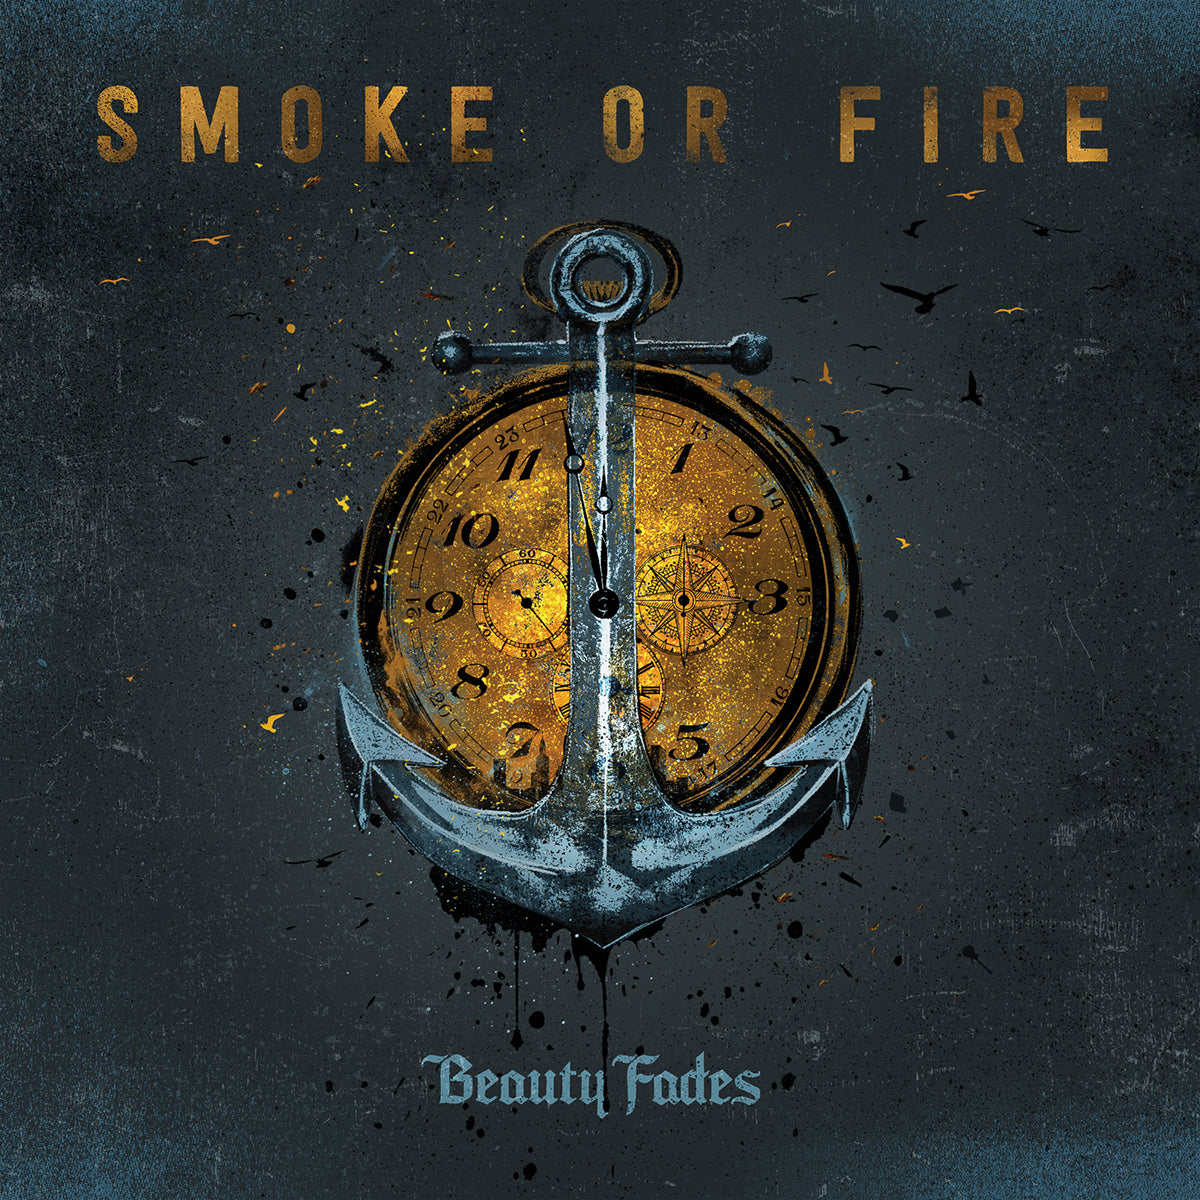 SMOKE OR FIRE "Beauty Fades" LP